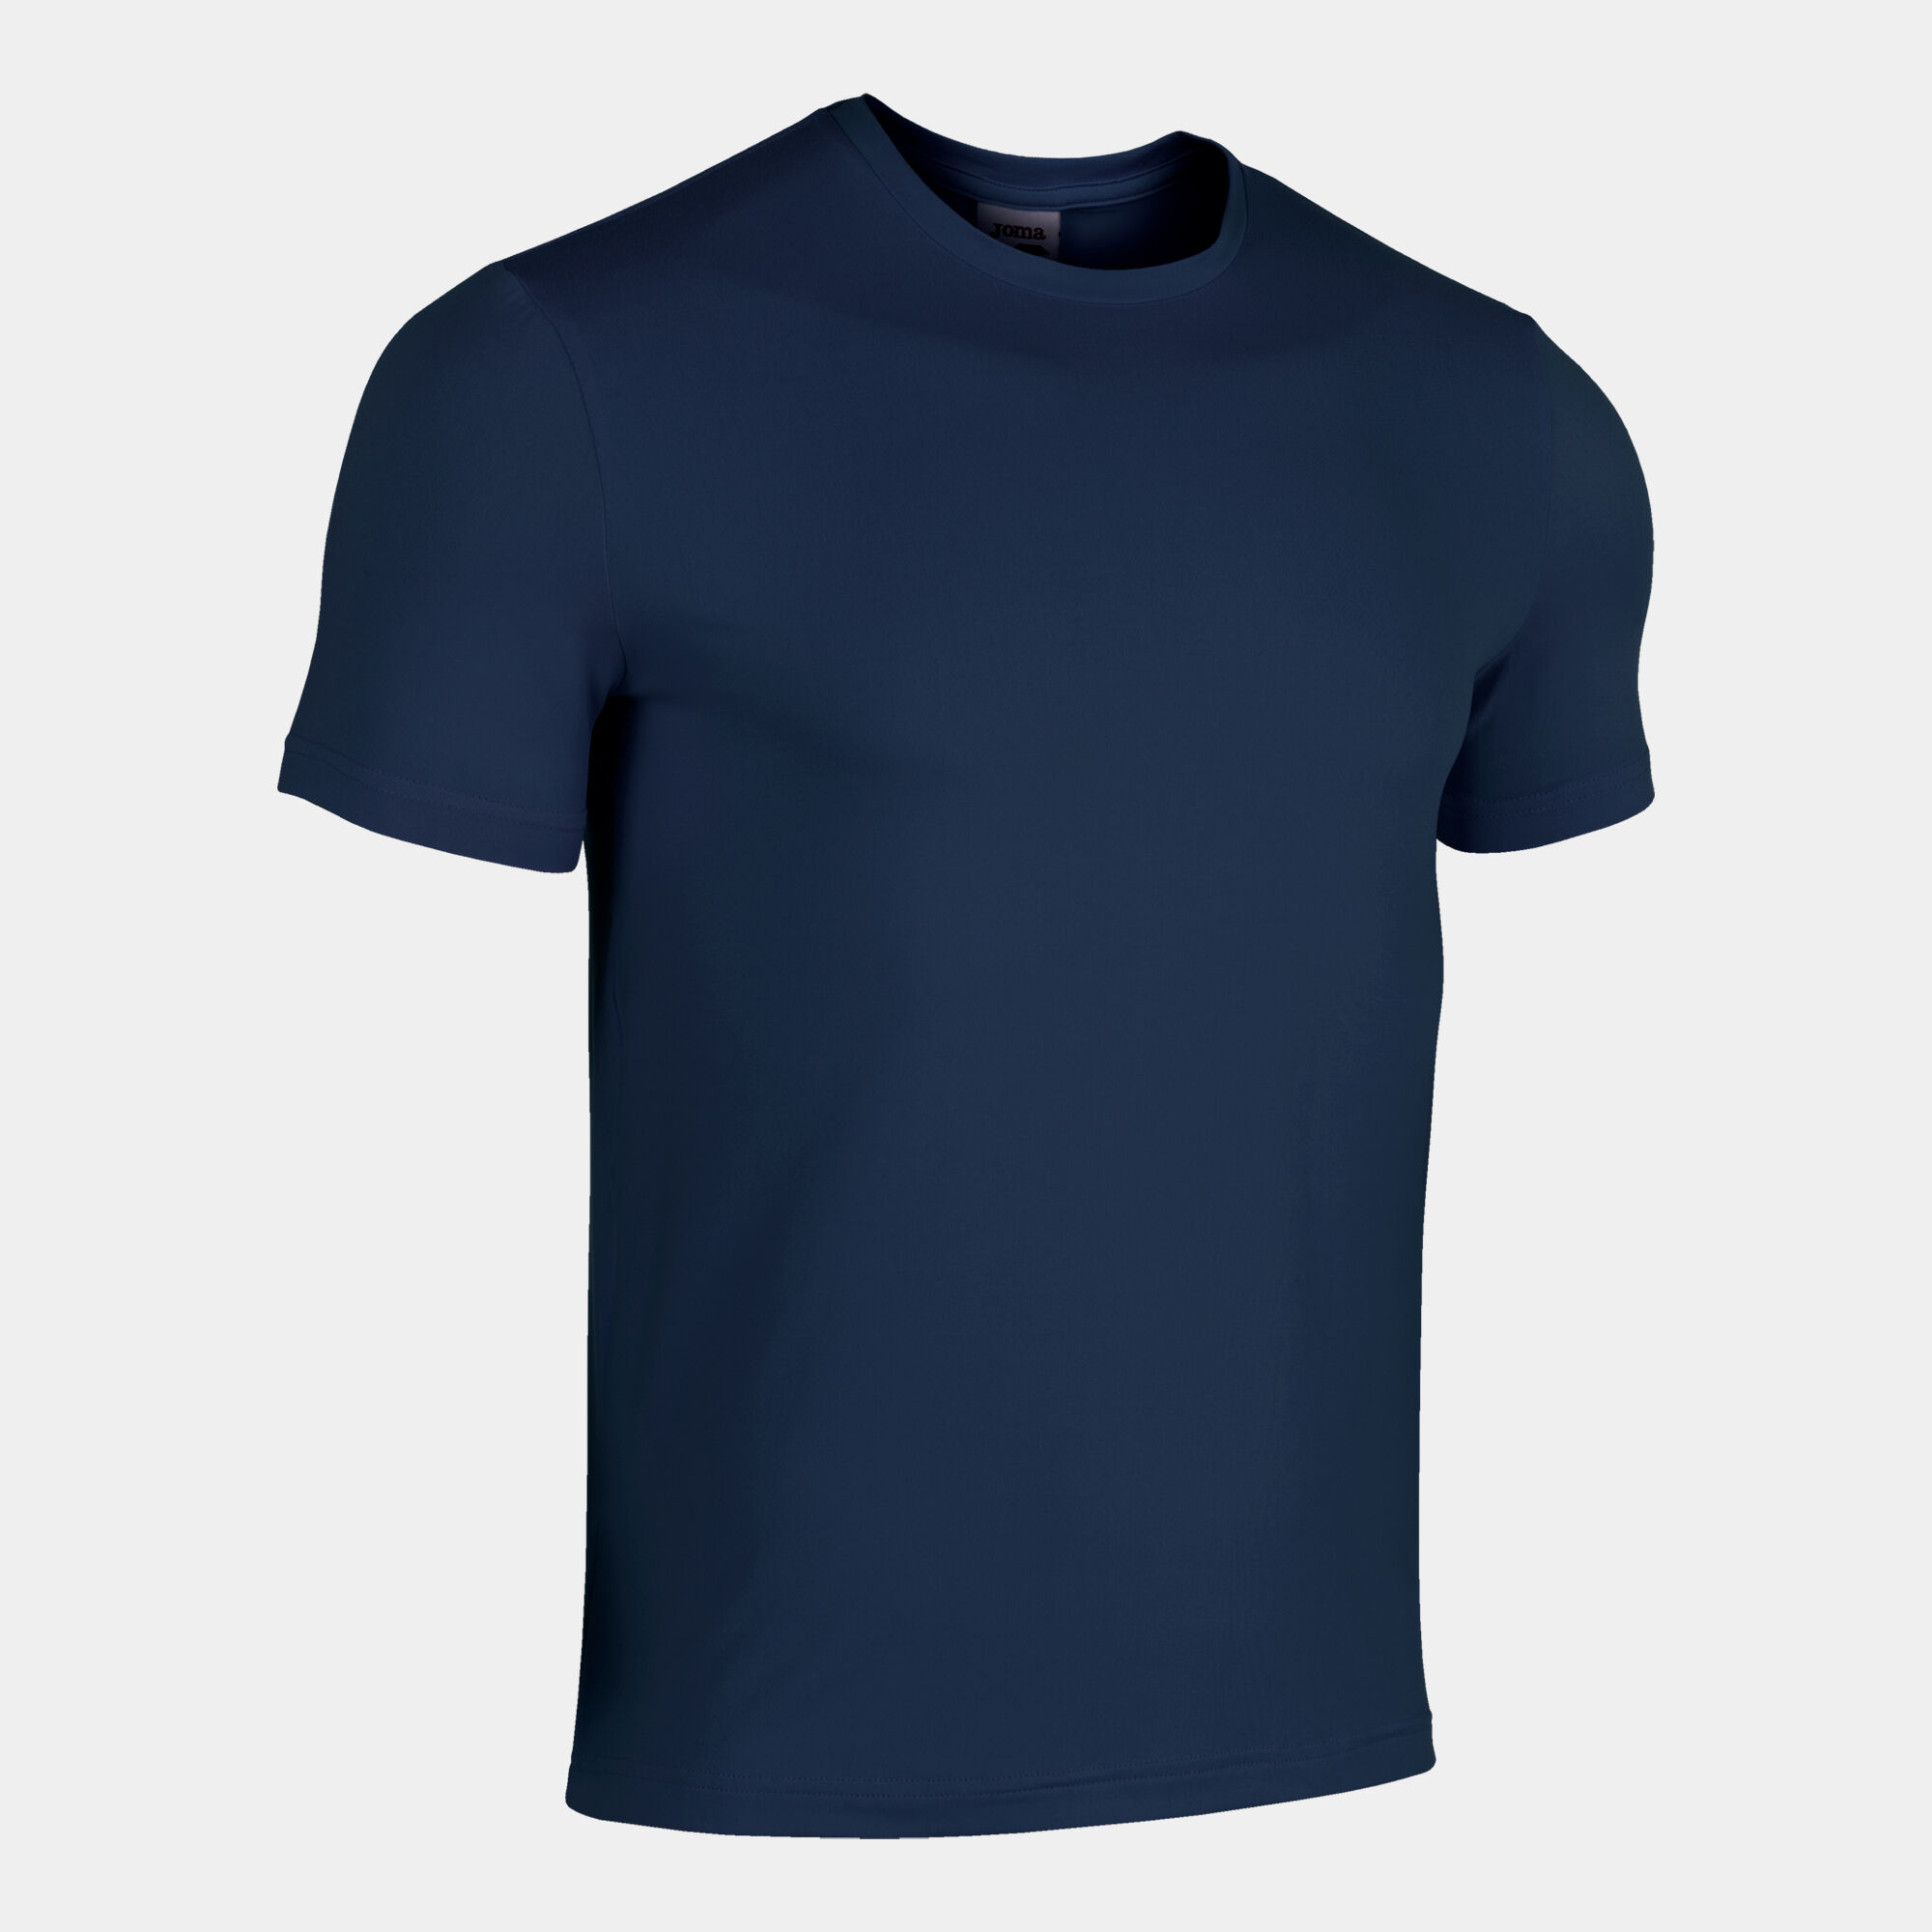 Shirt short sleeve man Sydney navy blue